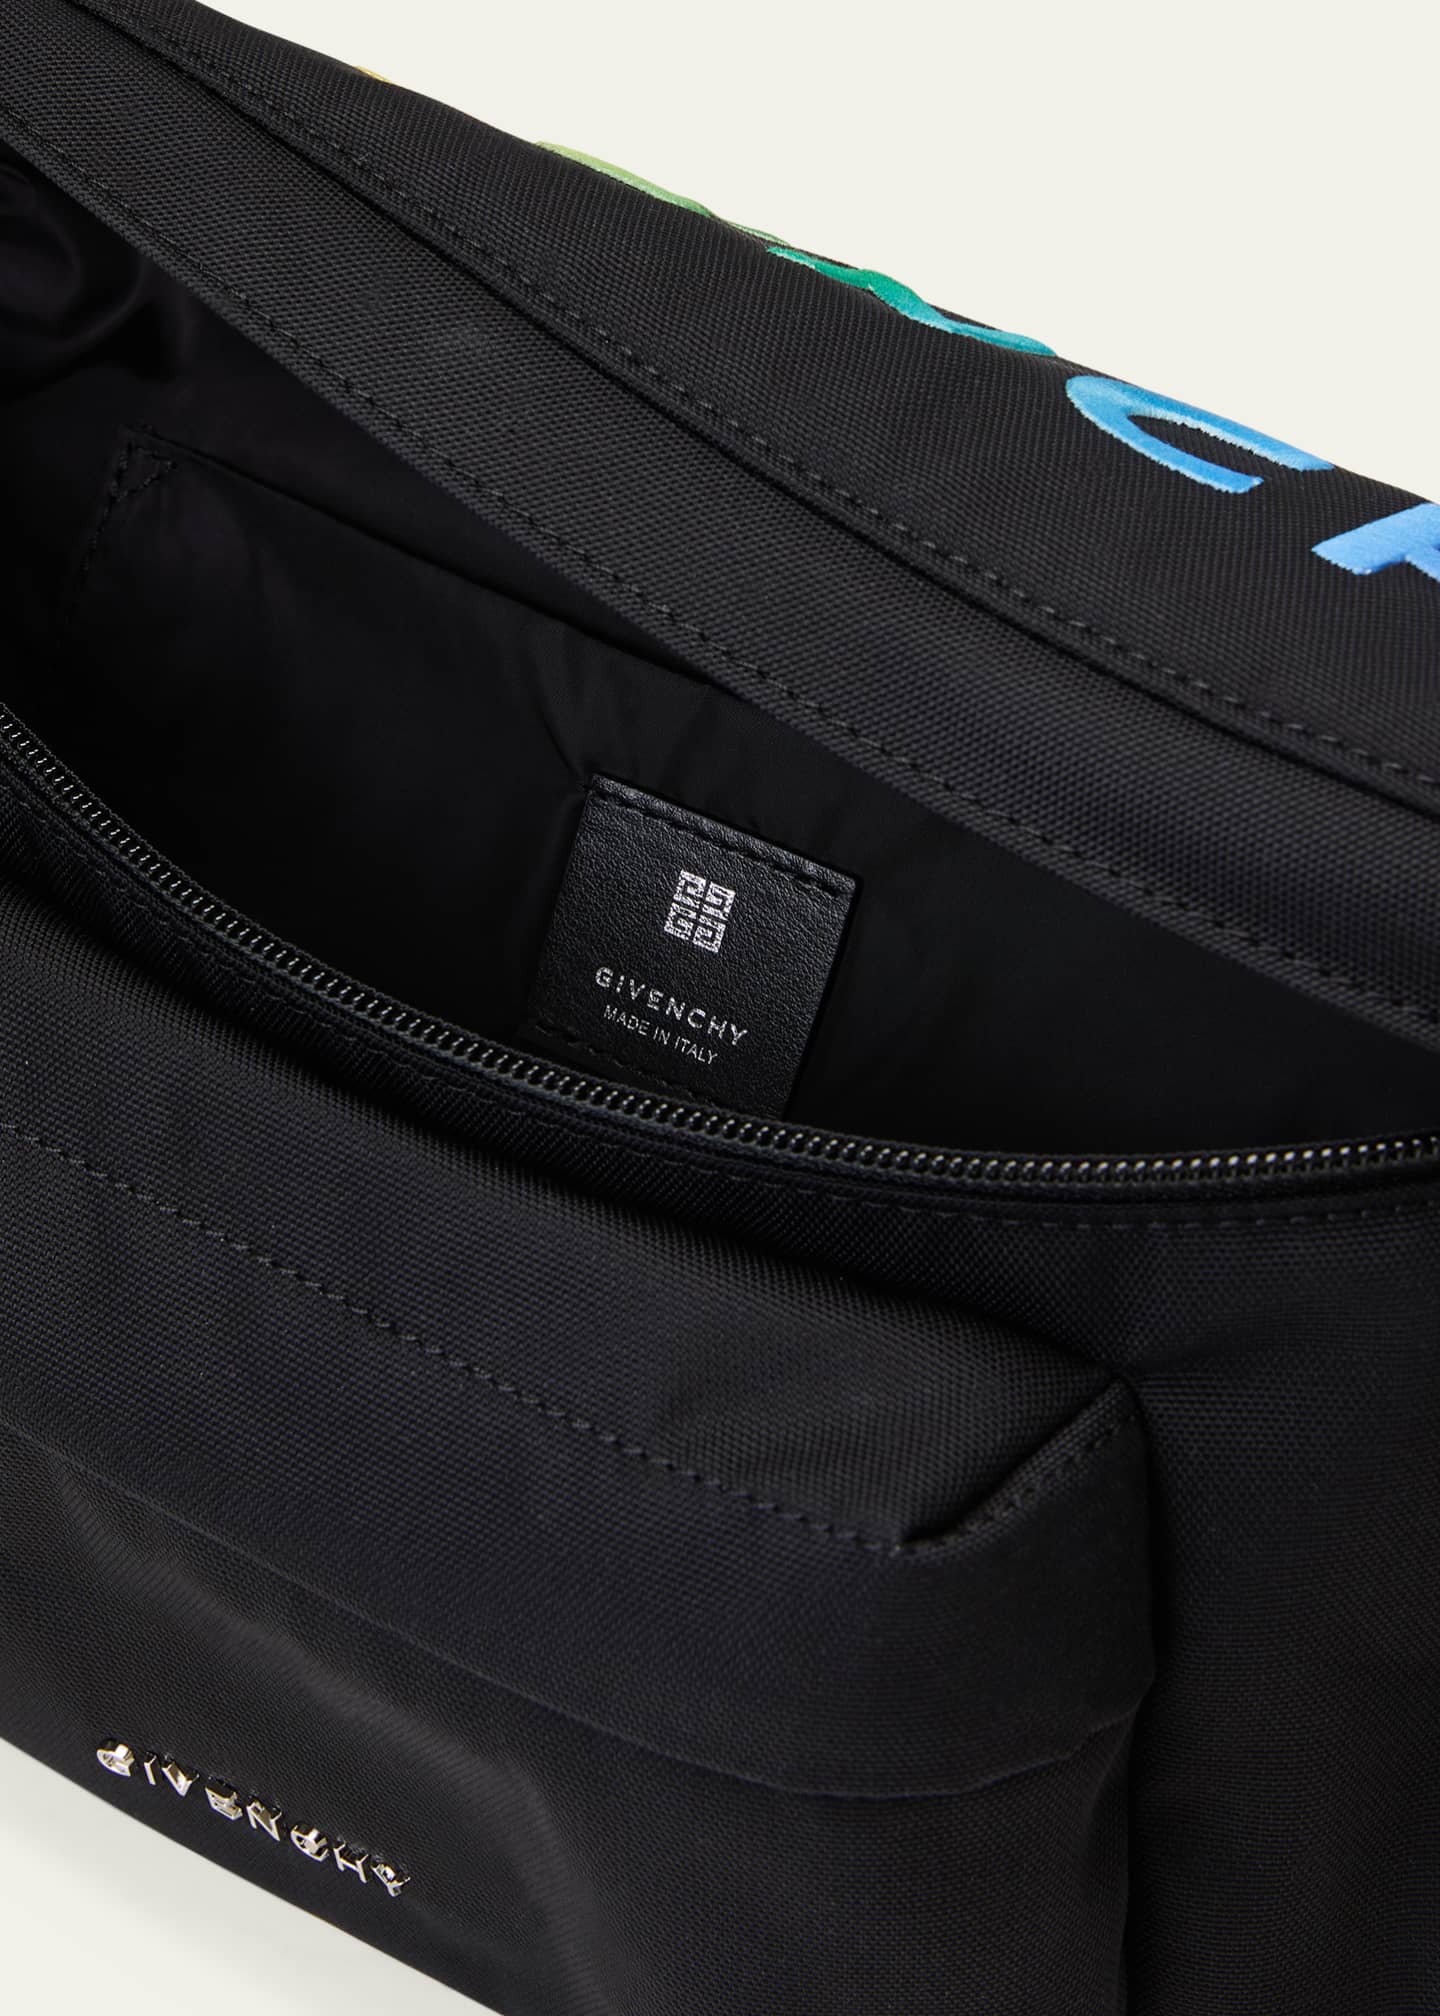 Givenchy Men's Essential U Multicolor Logo Belt Bag - Bergdorf Goodman